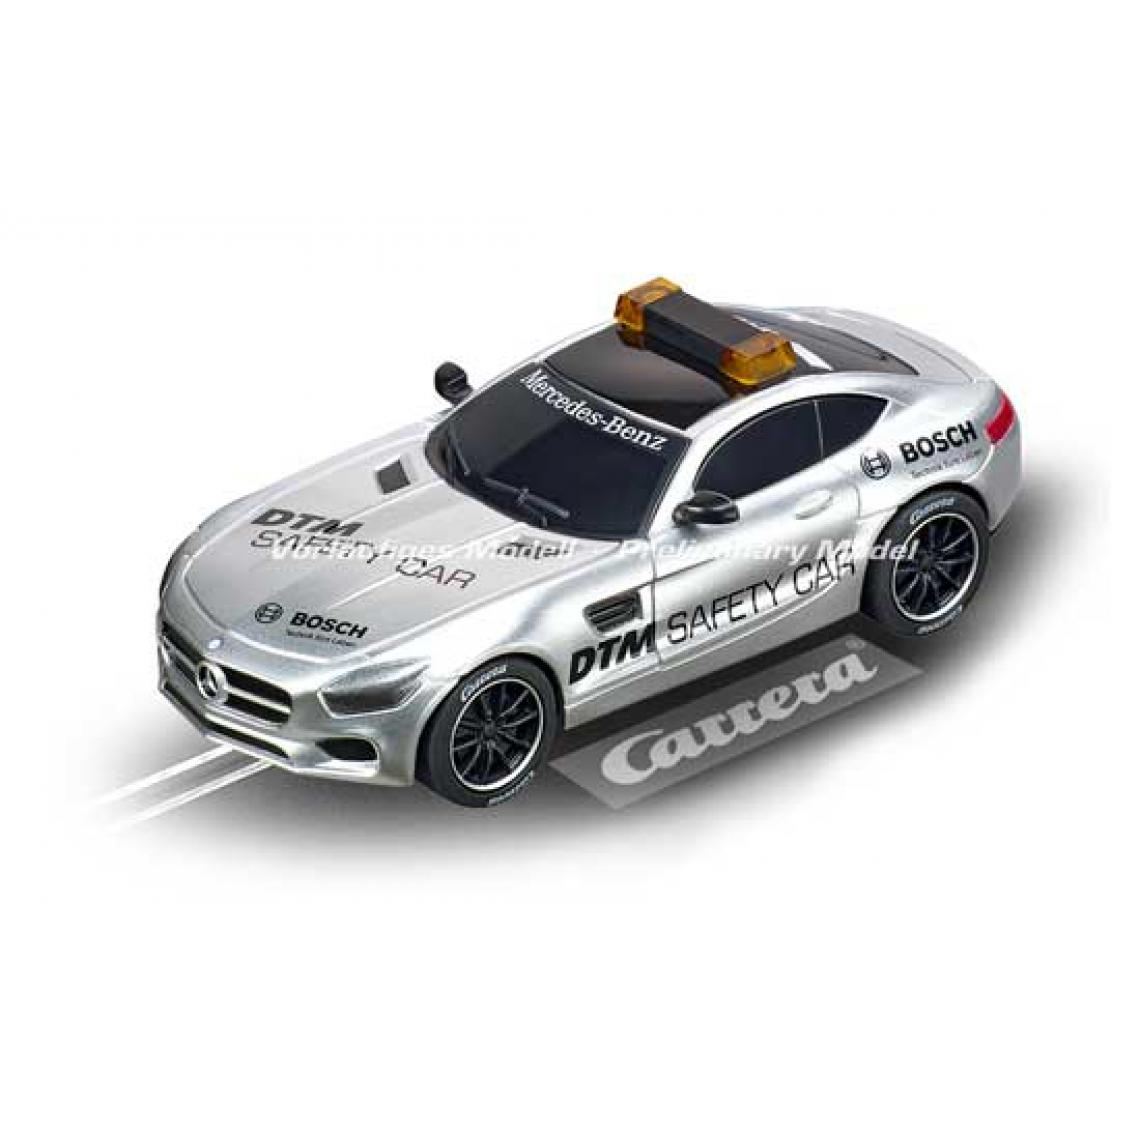 Carrera Montres - Mercedes AMG GT DTM Safety car - 1/43e - Carrera - Circuits